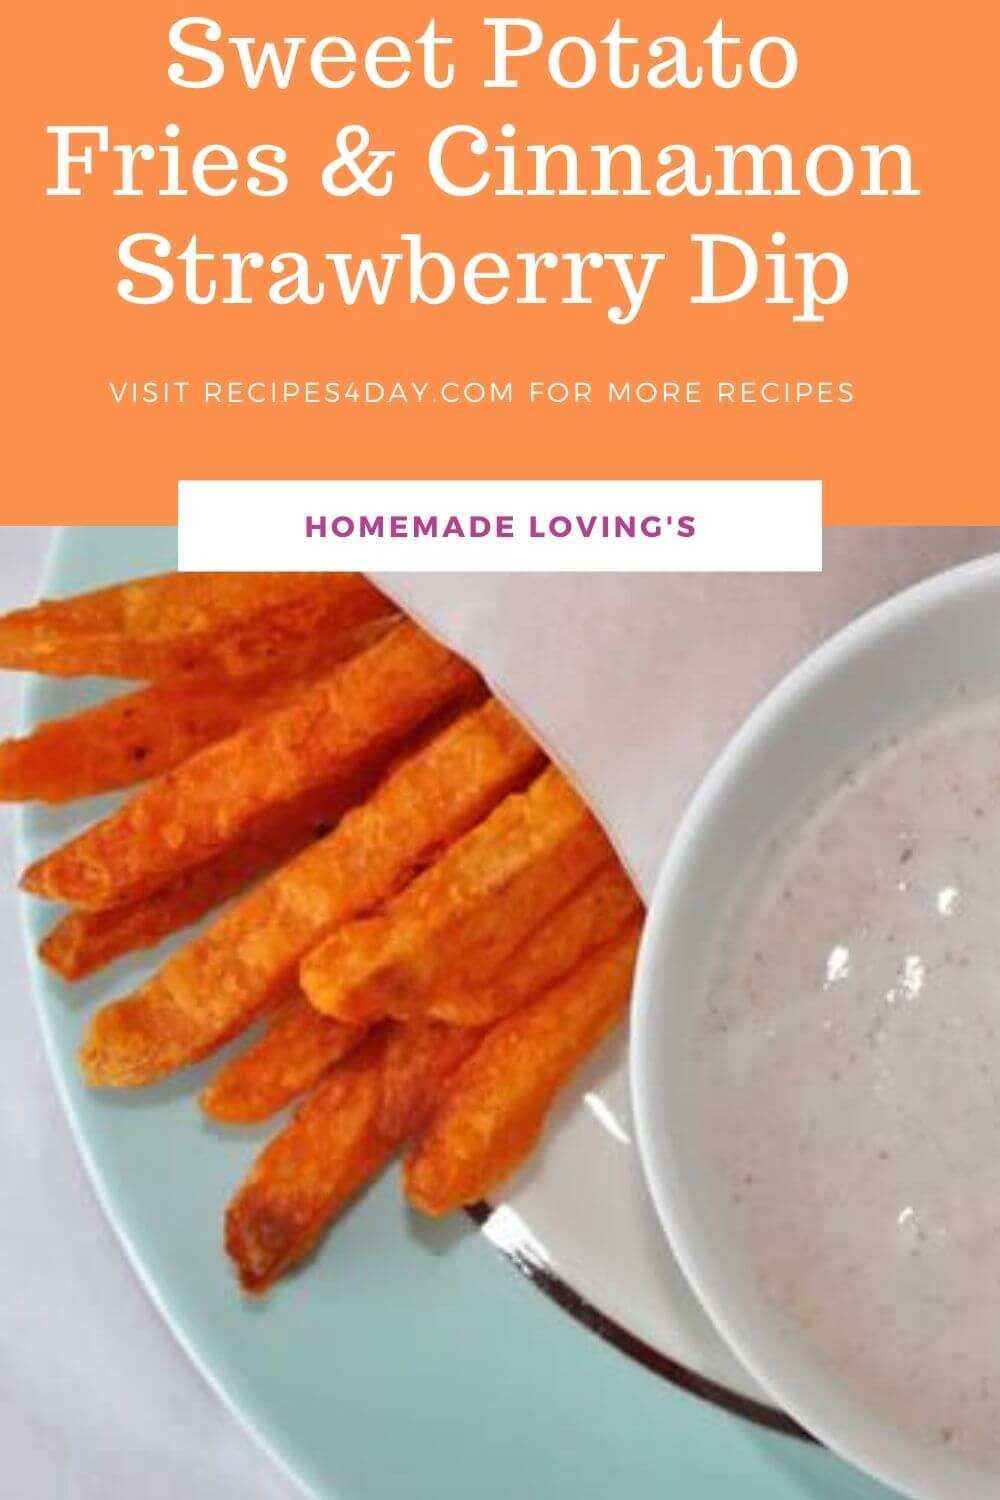 Sweet Potato Fries & Cinnamon Strawberry Dip